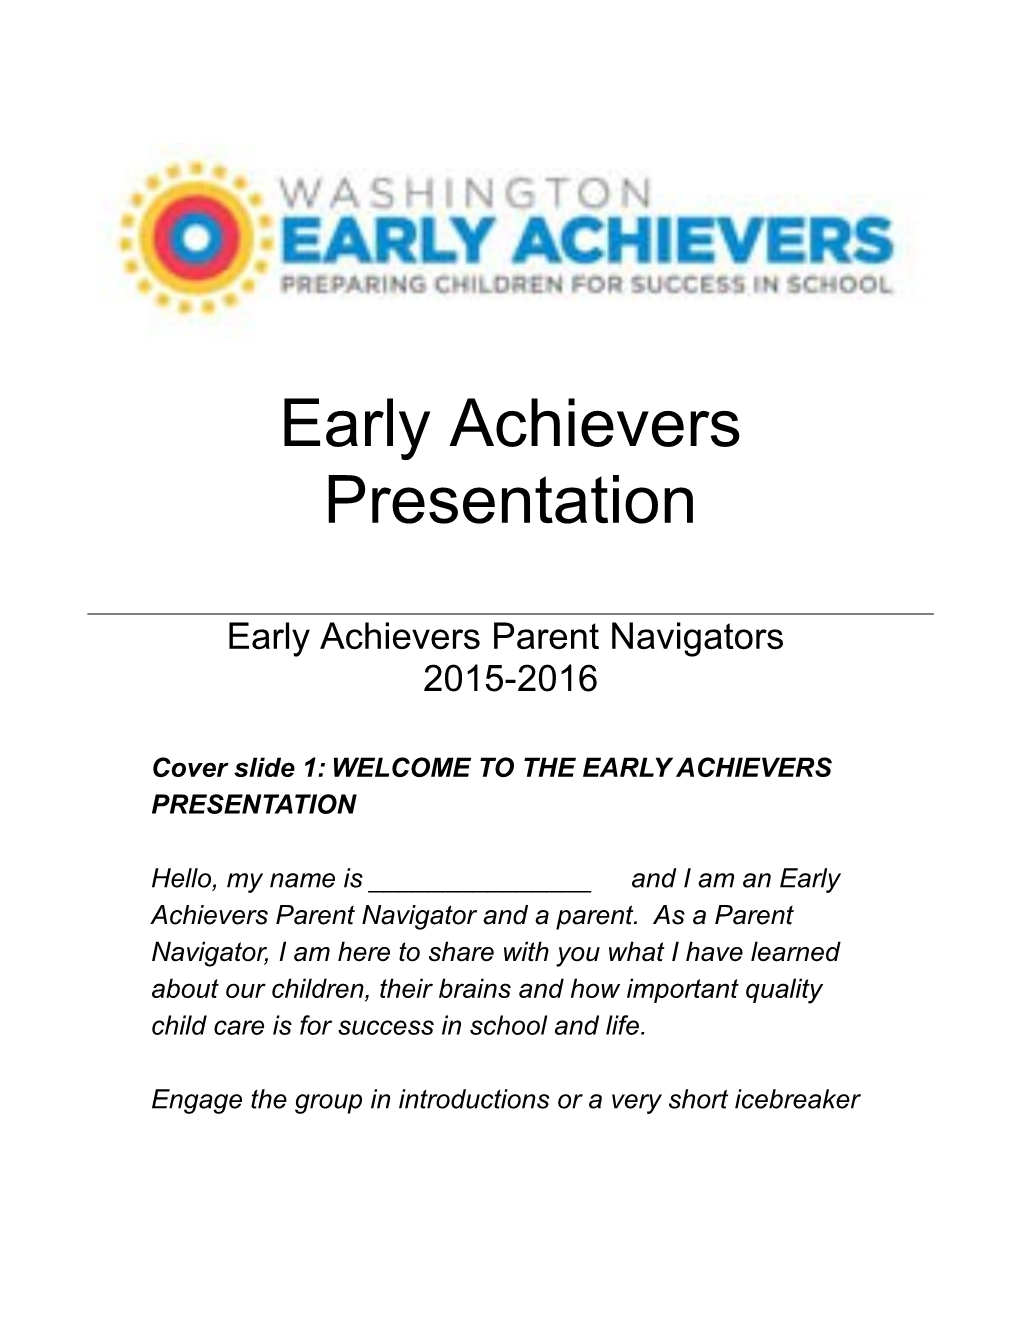 Early Achieverspresentationearly Achieversparent Navigators2012-2013Healthwise